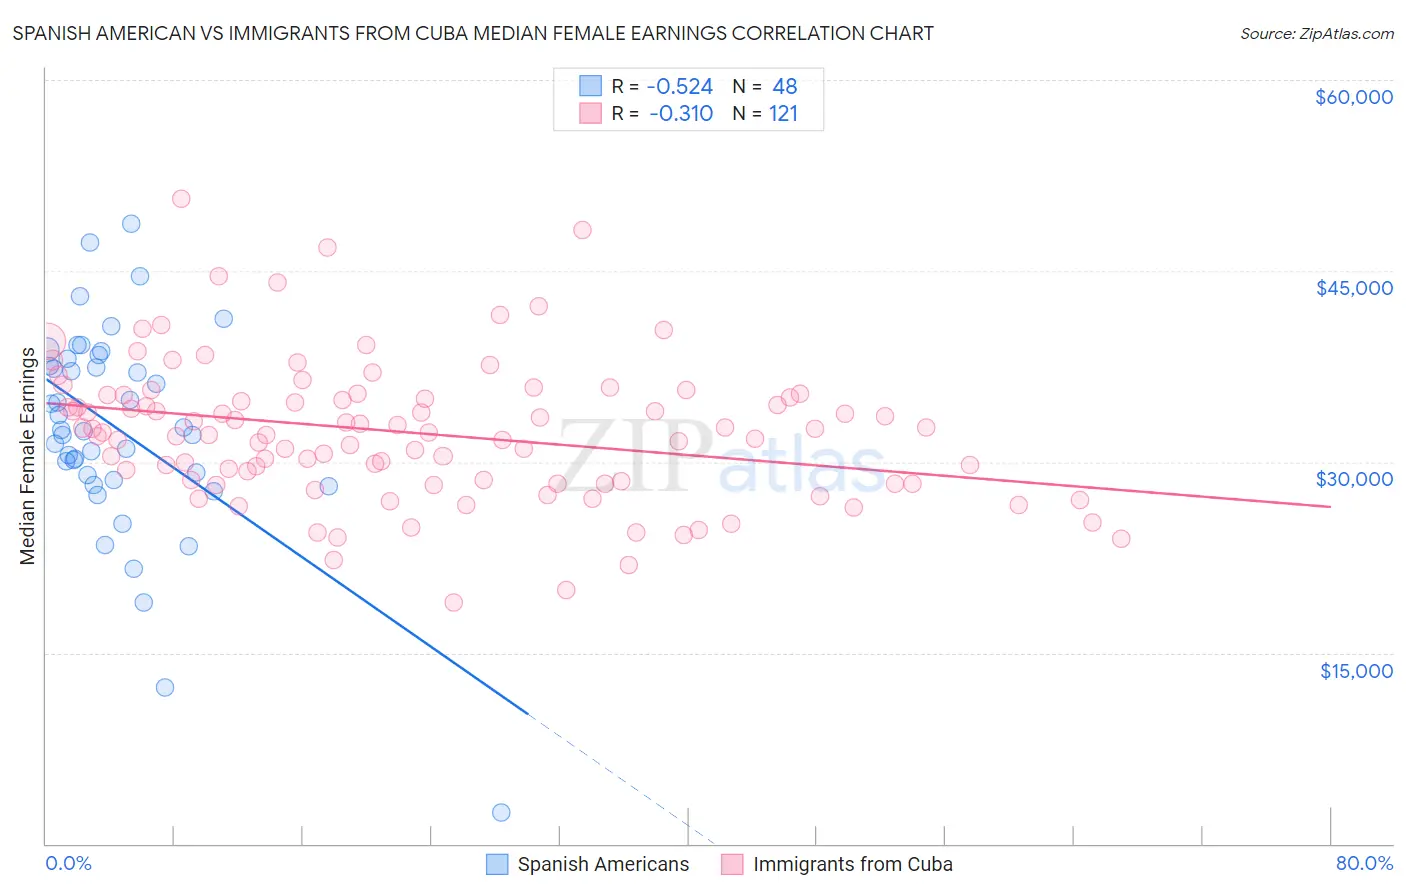 Spanish American vs Immigrants from Cuba Median Female Earnings